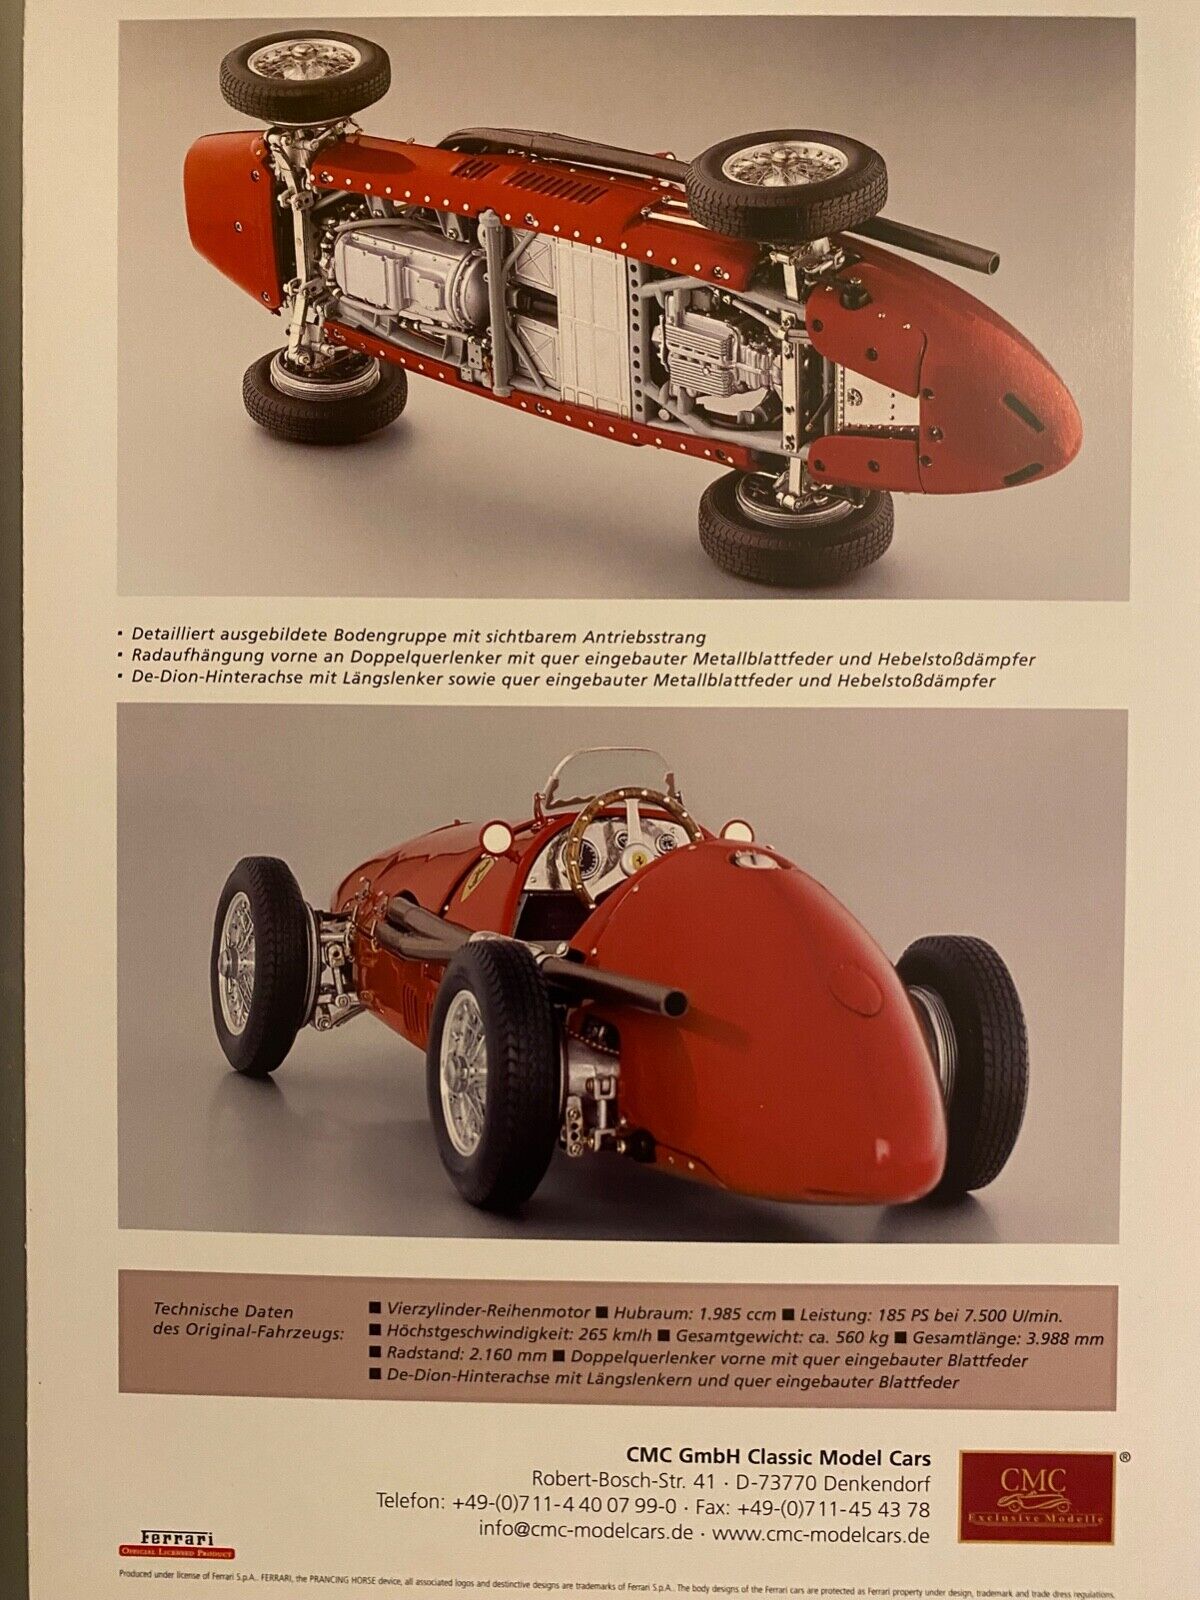 CMC Prospekt für Ferrari 500 F2 1953 1:18 Broschüre DinA4 Neu